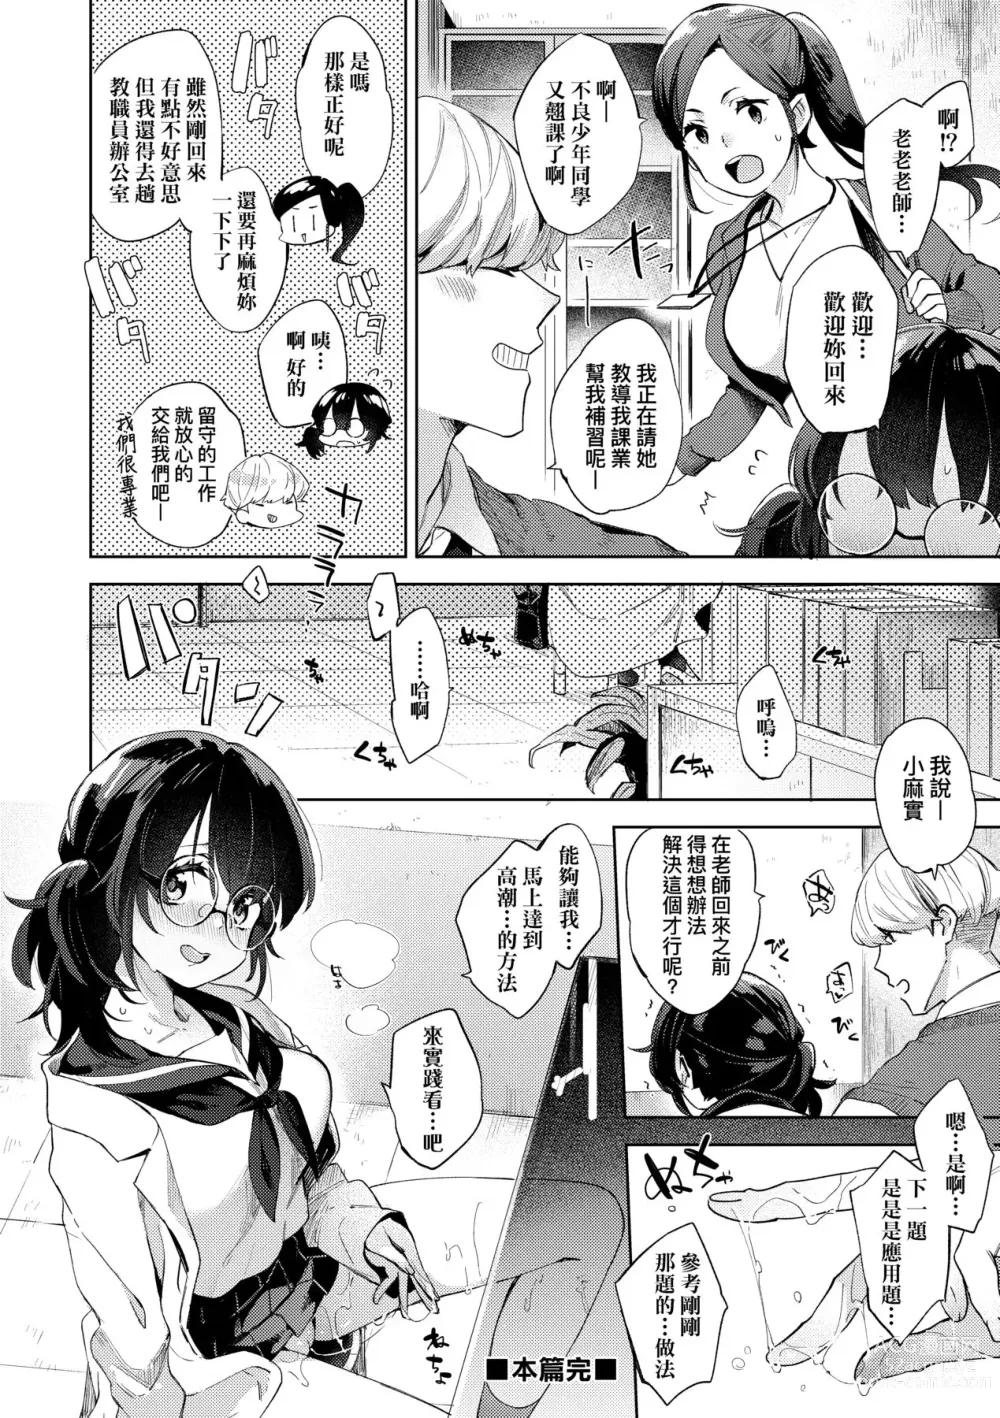 Page 202 of manga Echi Echi School Life (decensored)